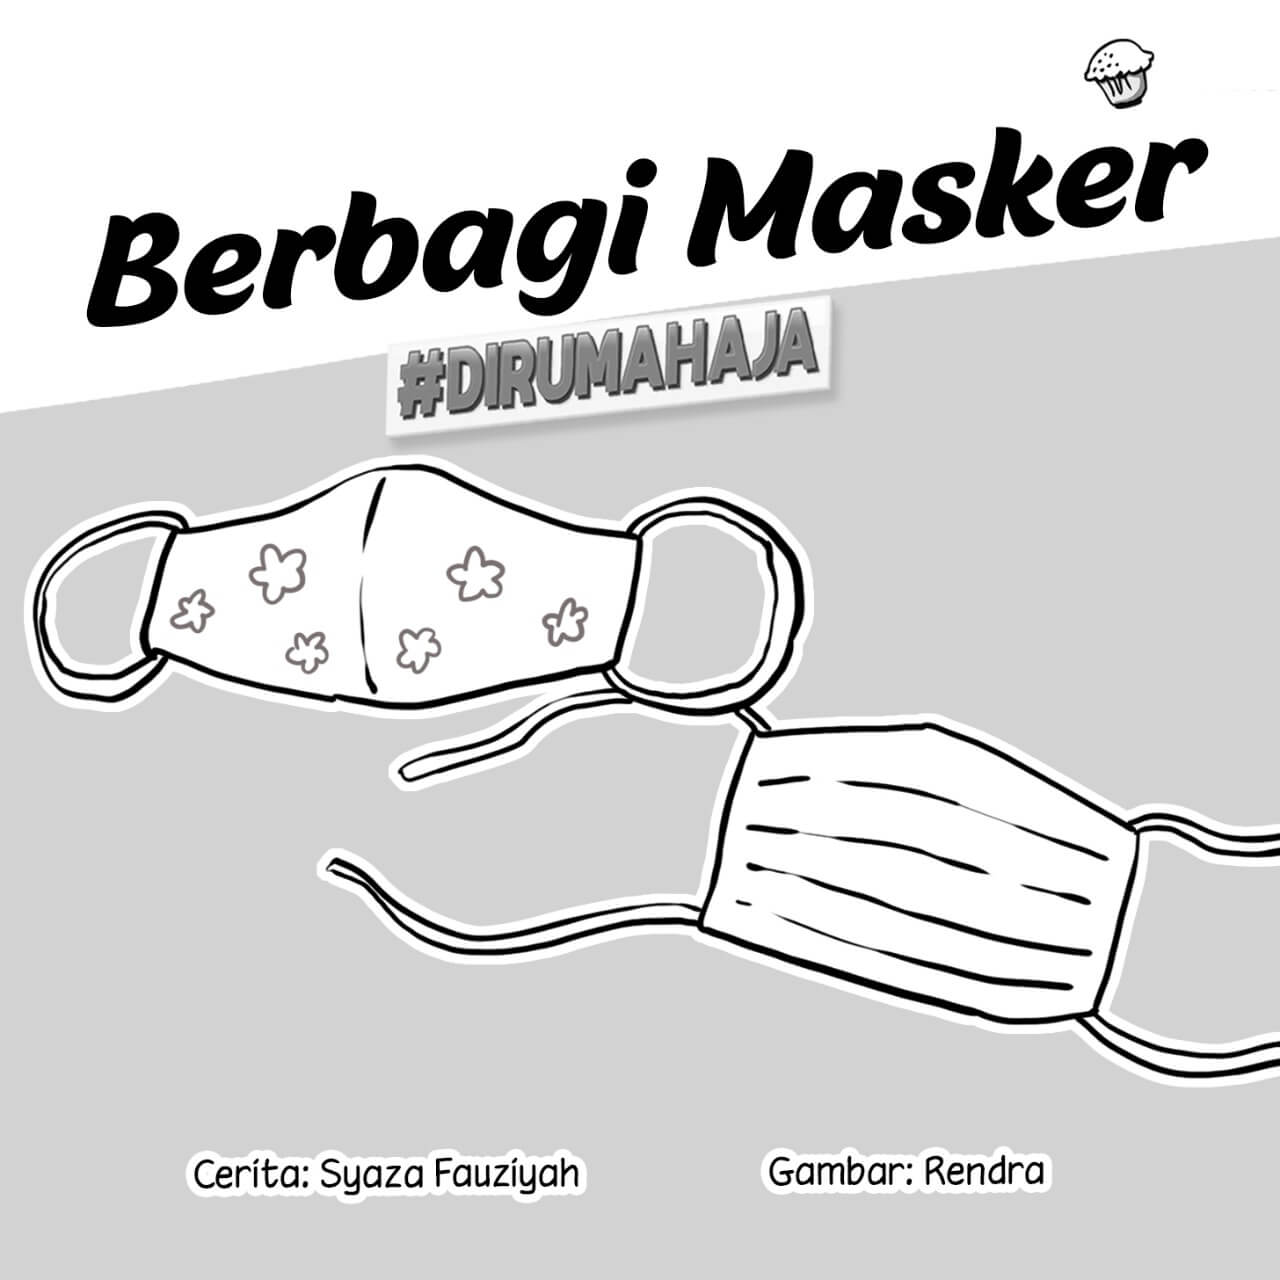 Berbagi Masker Cover BW